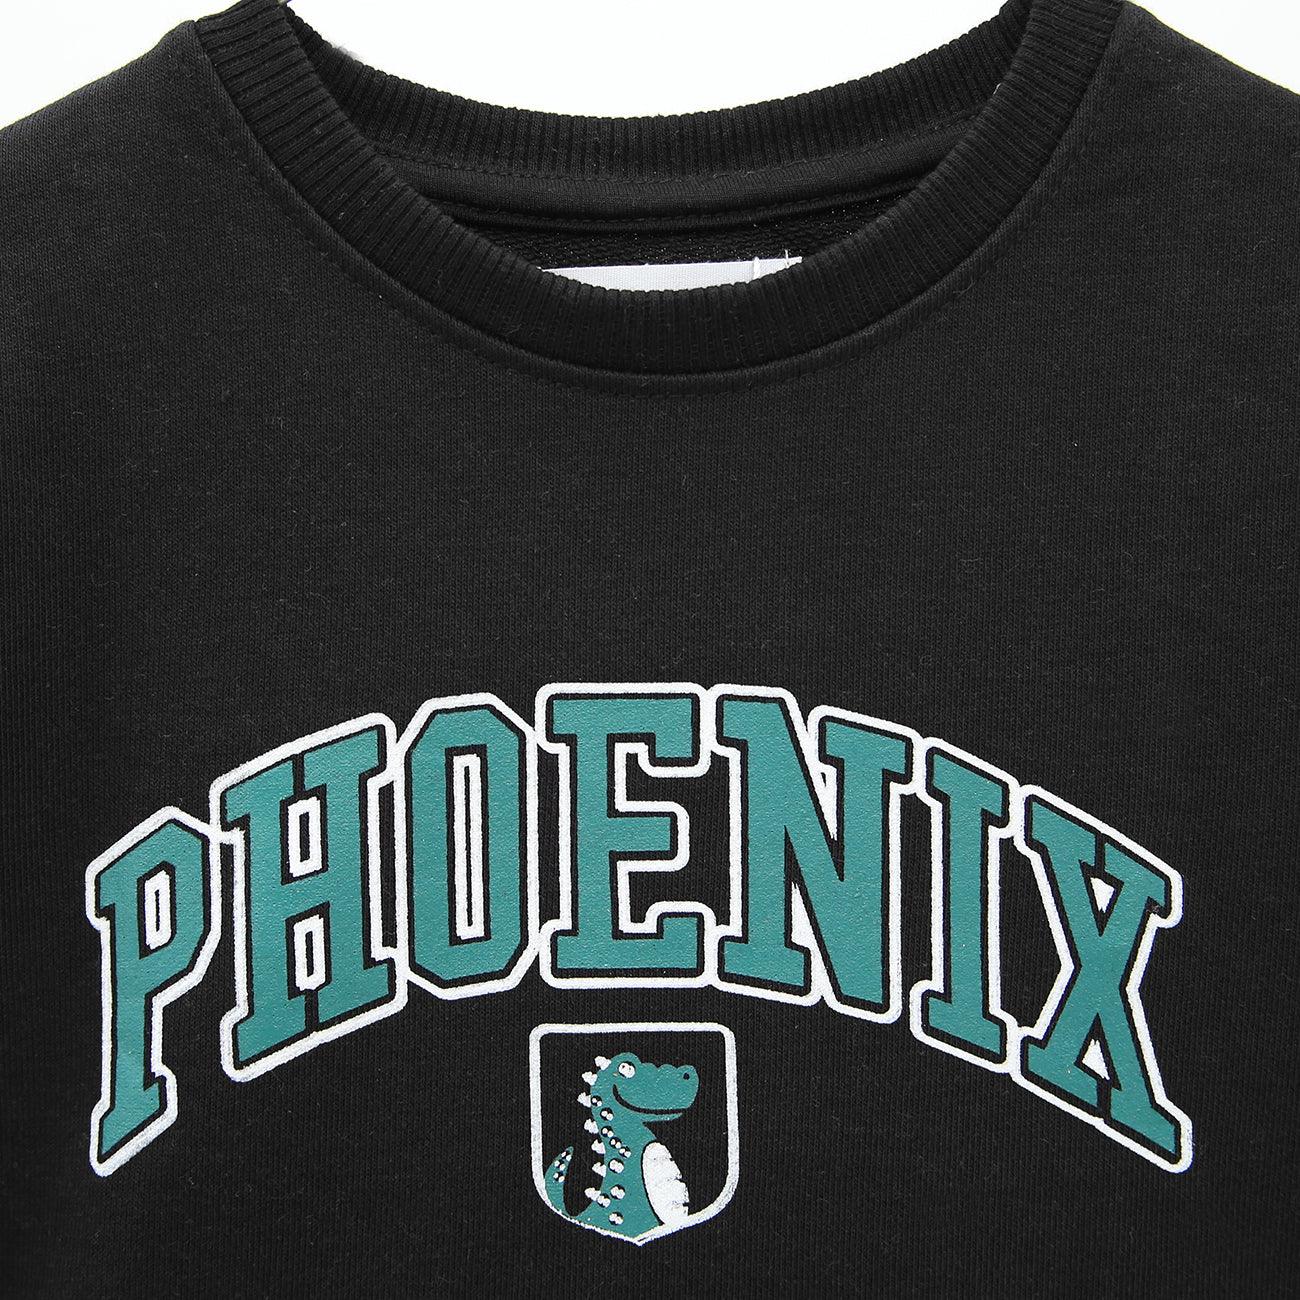 Premium Quality Graphic Black Terry Sweatshirt For Kids (MN-120125) - Brands River